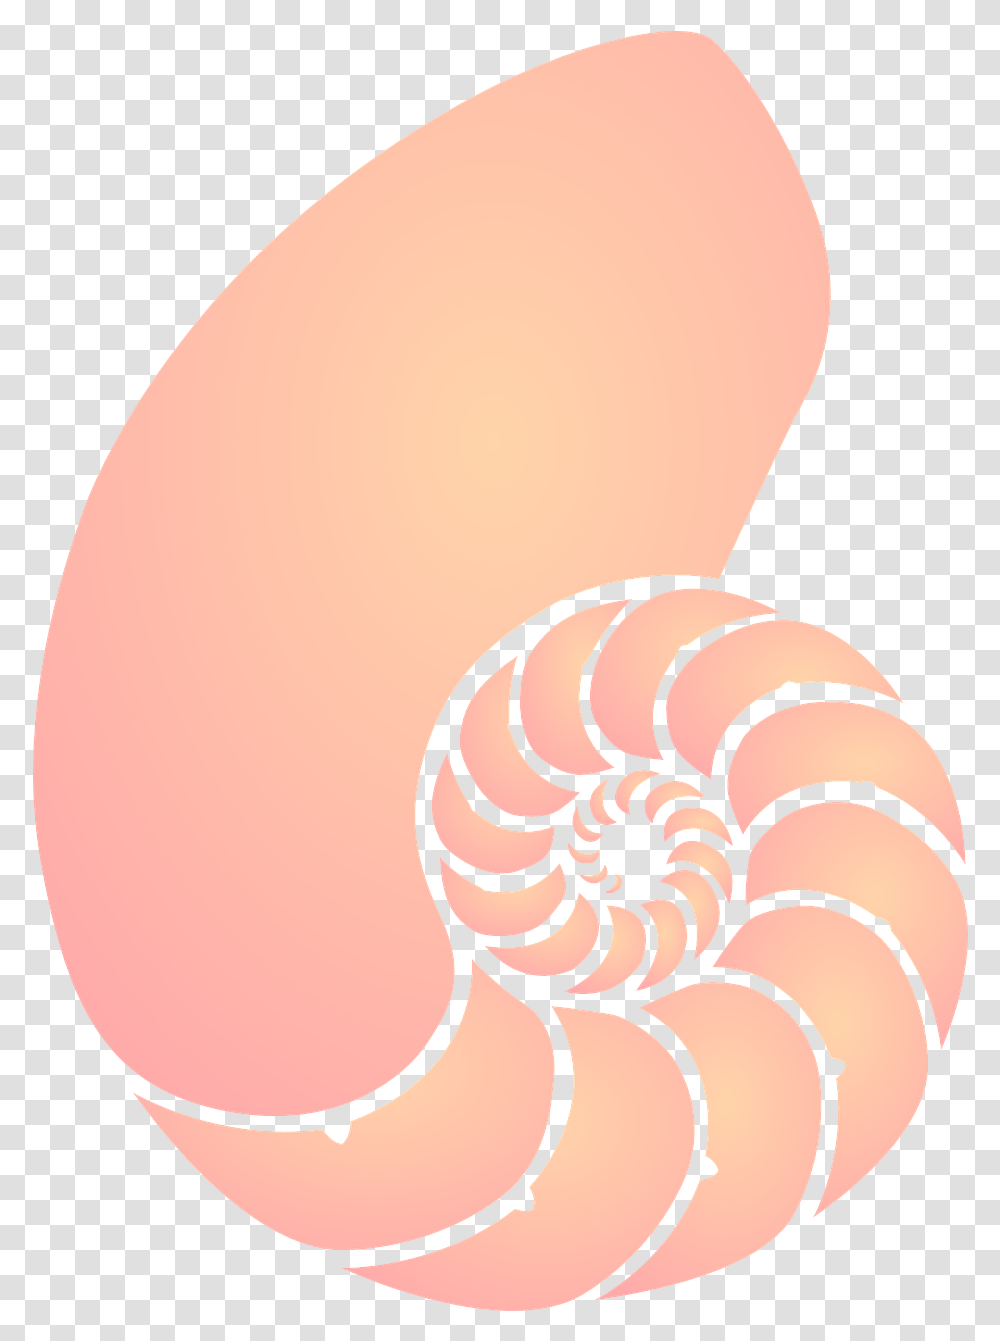 Shell Sea Orange Free Vector Graphic On Pixabay Clipart Background Seashells, Lamp, Animal, Sea Life, Invertebrate Transparent Png